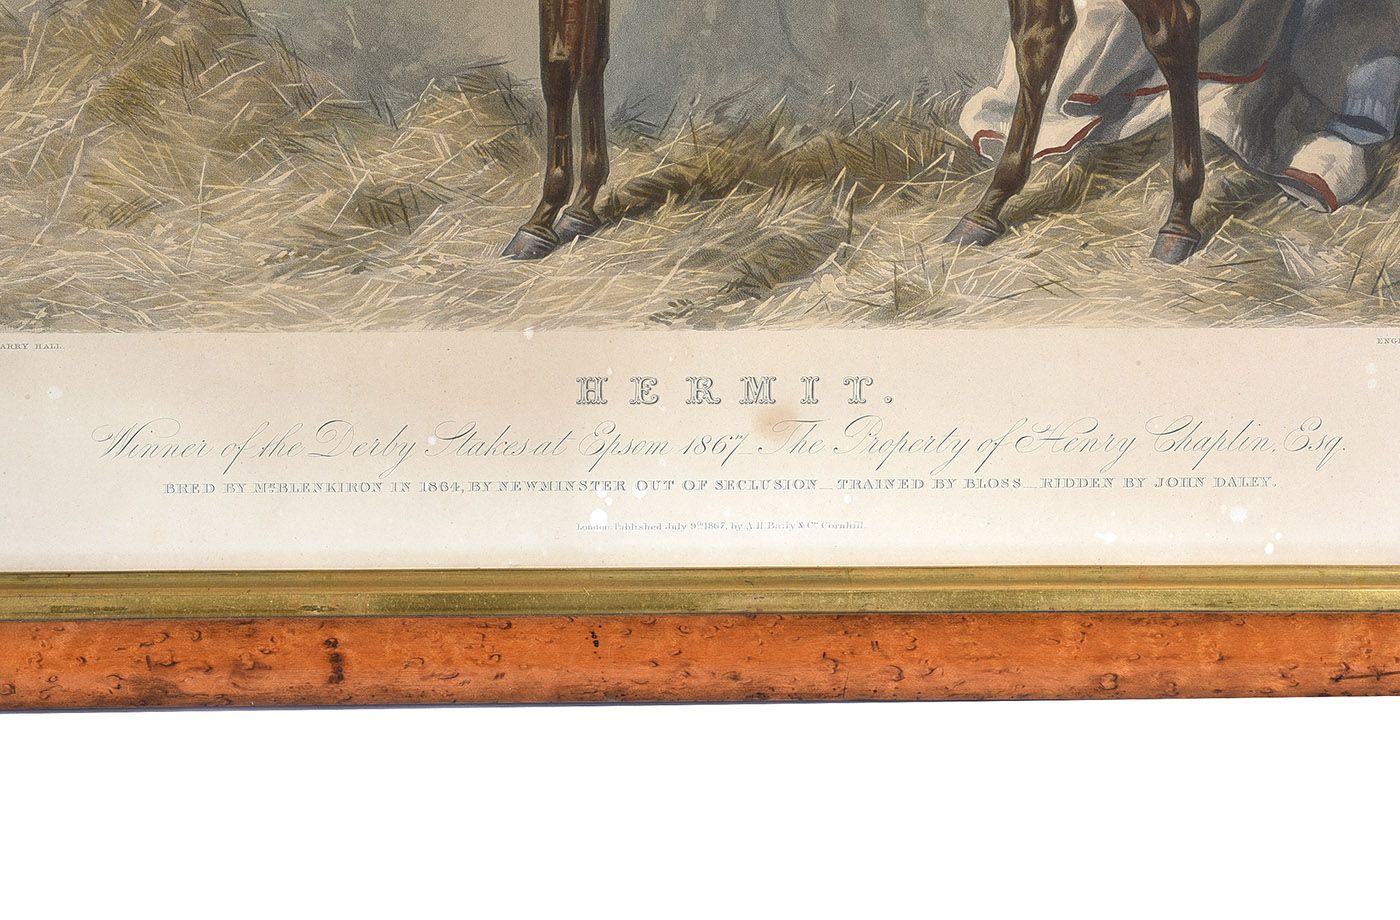 MAPLE FRAMED HORSE ENGRAVING at Ross's Online Art Auctions